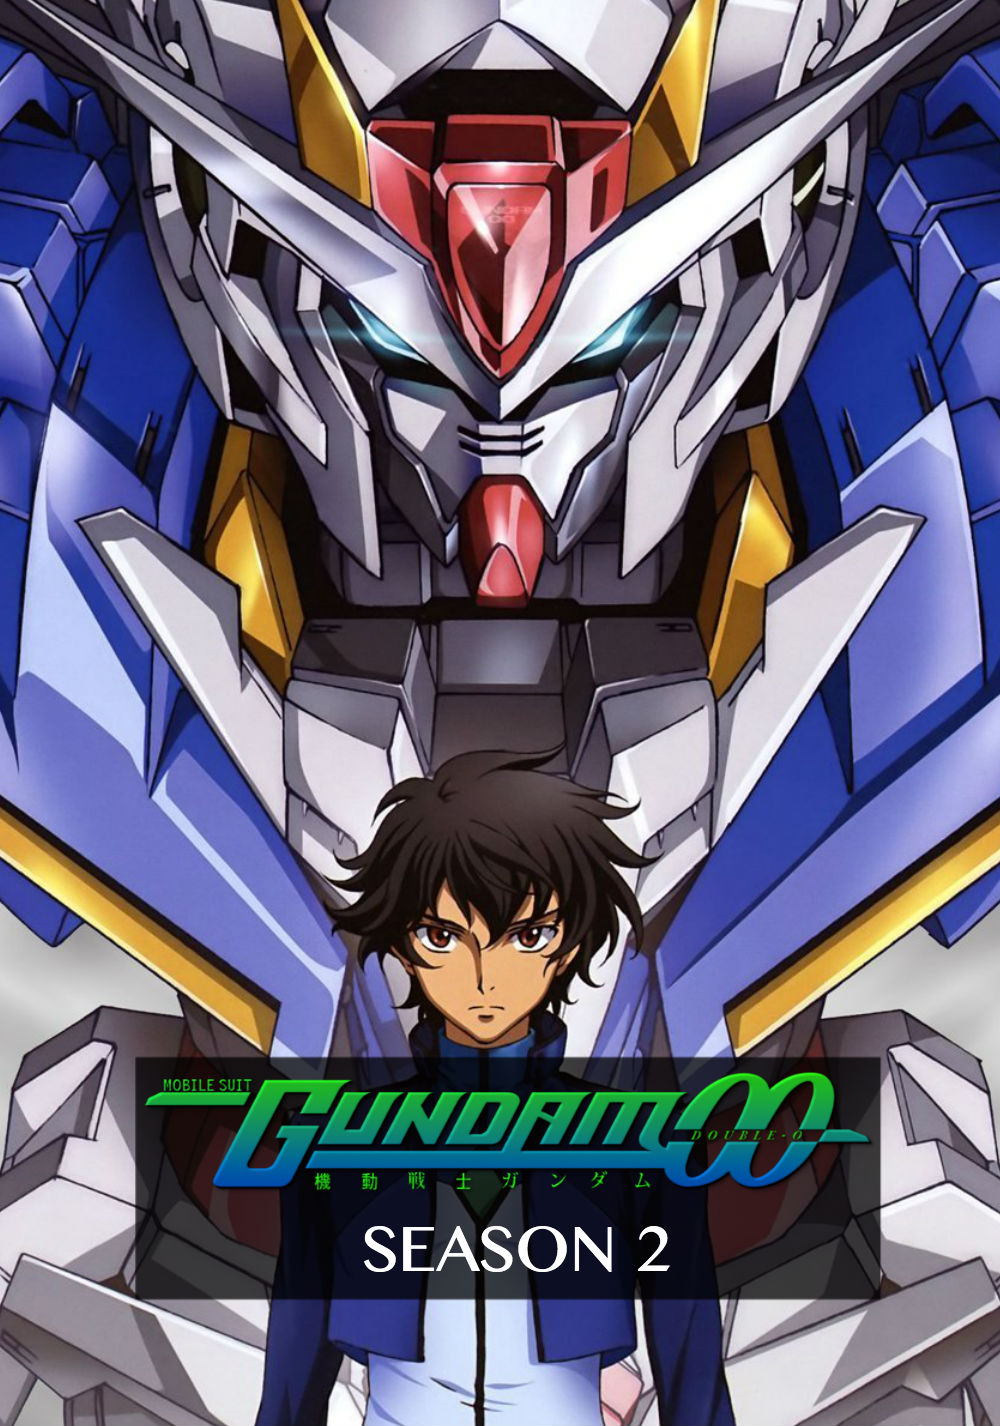 Watch Season 0 Of Mobile Suit Gundam 00 Free Streaming Online Plex